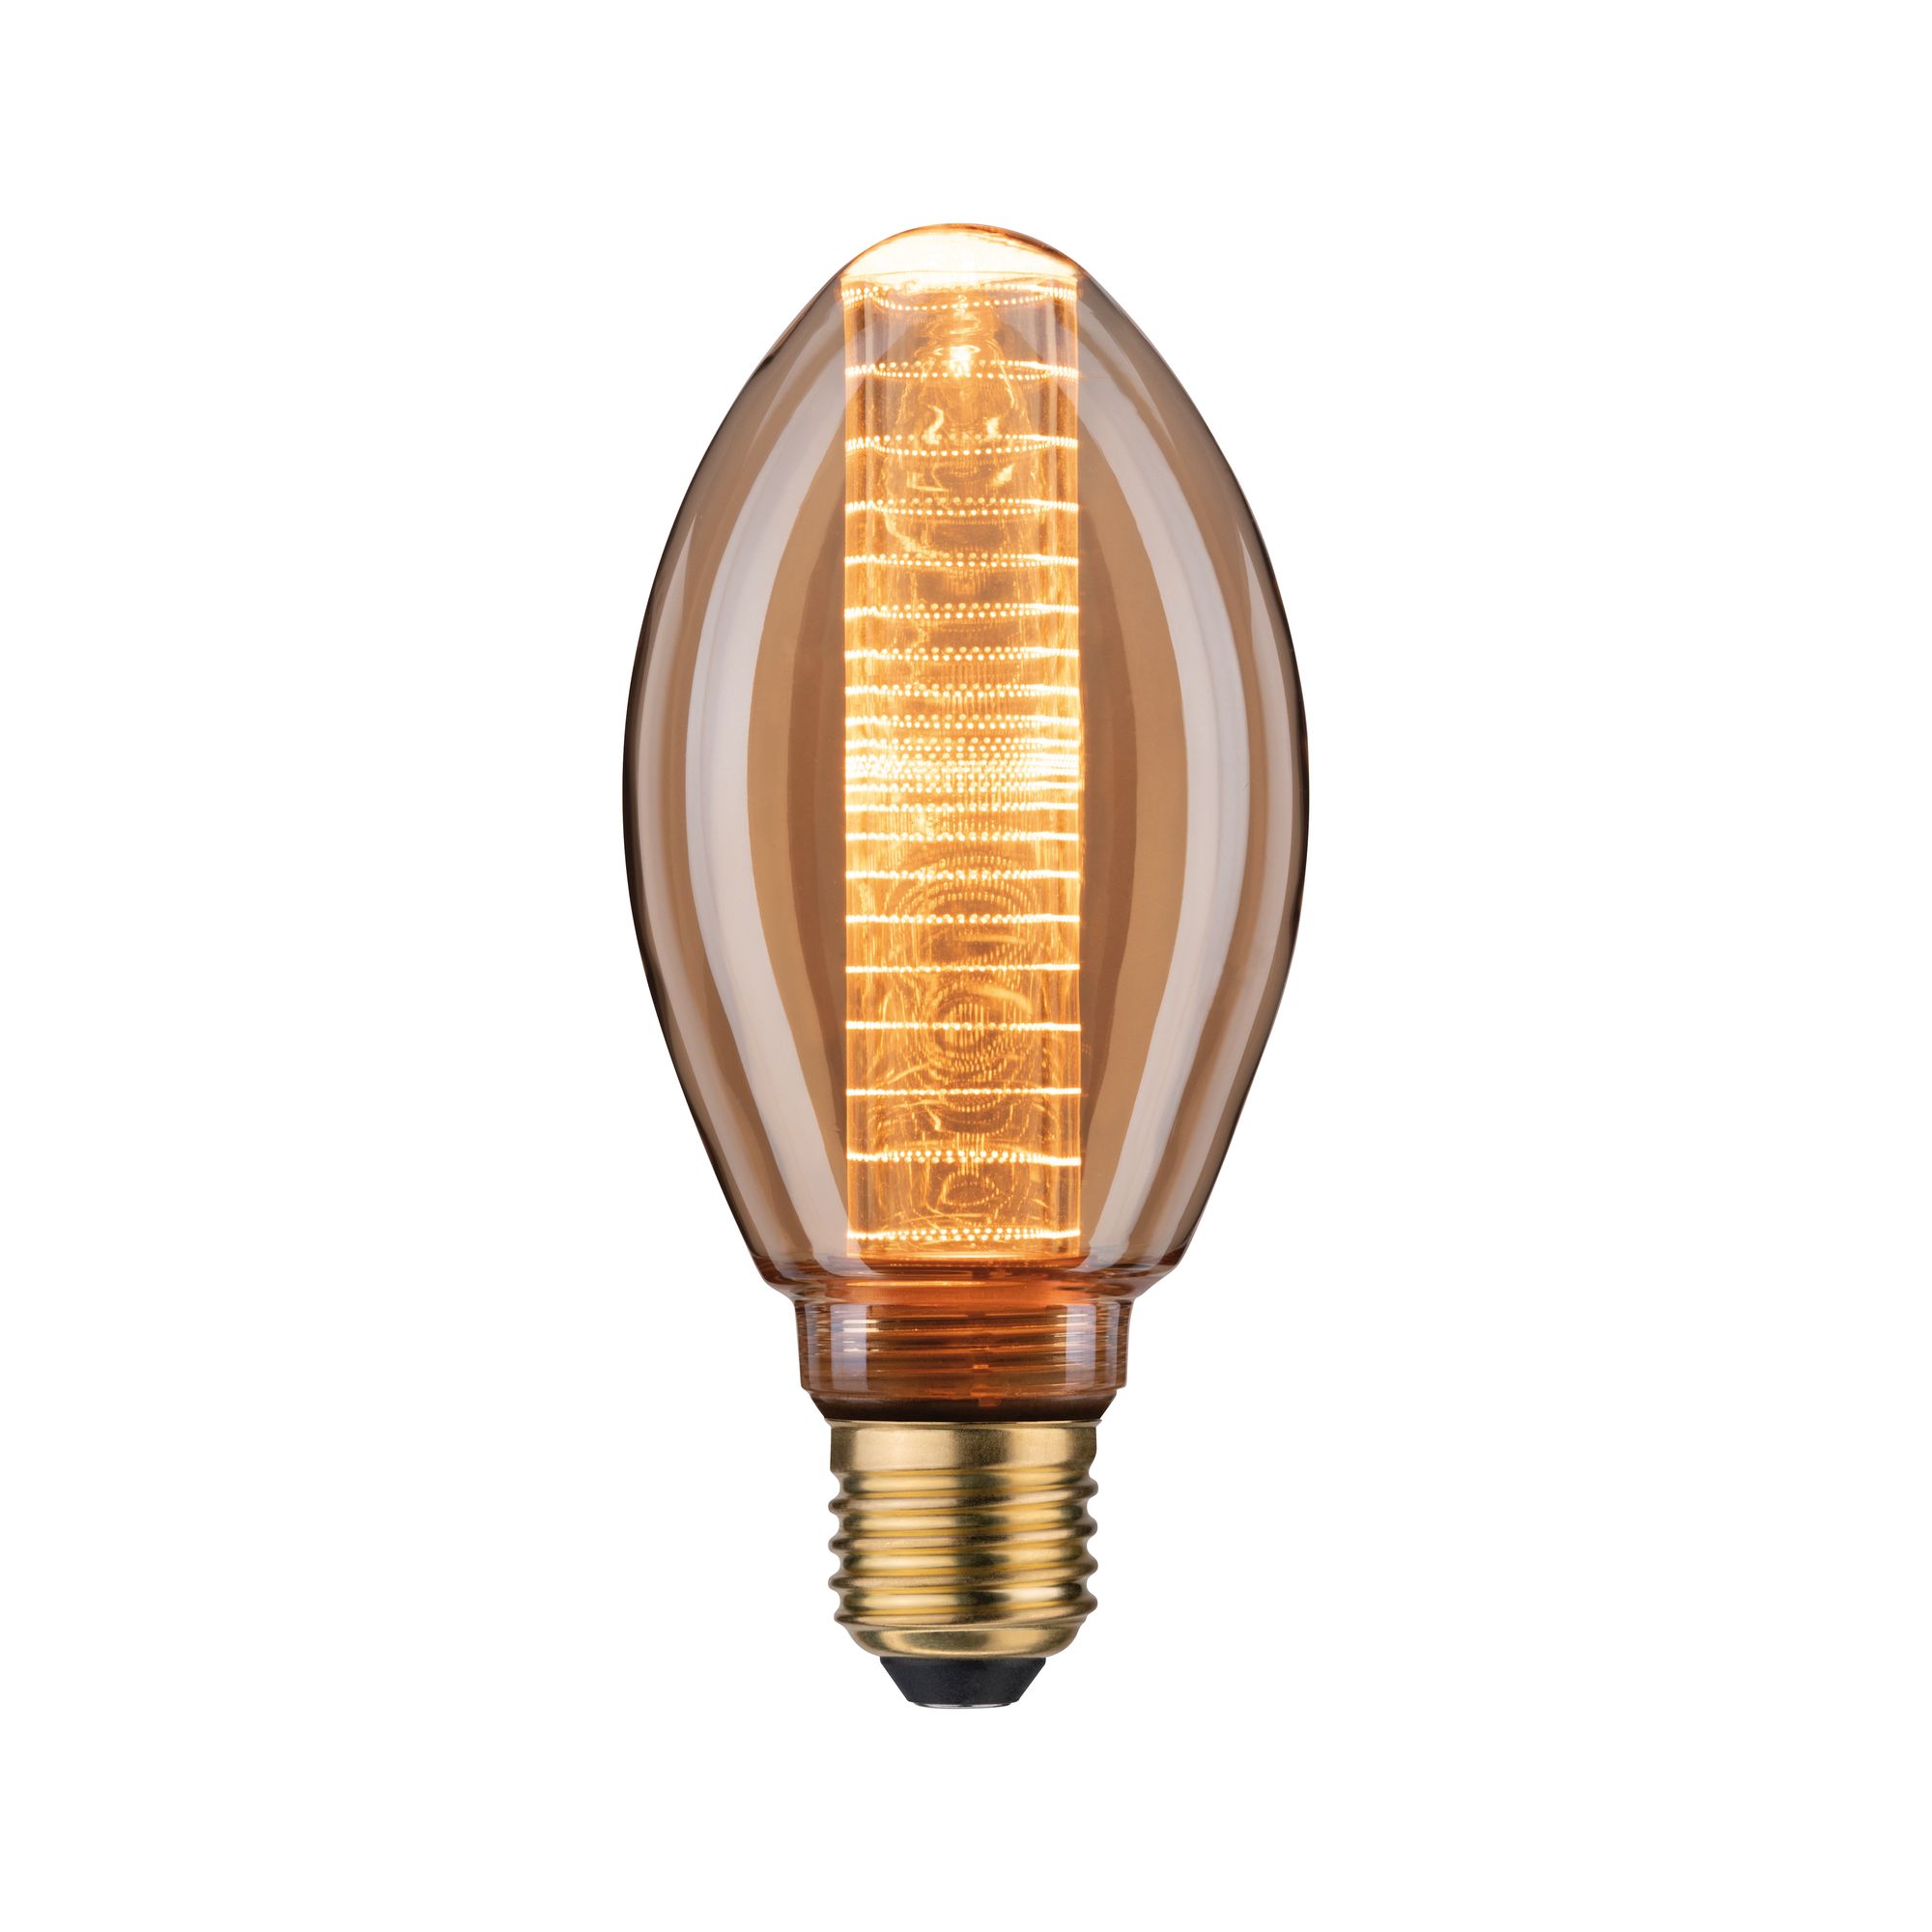 Glow Paulmann Filament gold warmweiß Glühbirne Inner extra Ringkolben 28601 LED